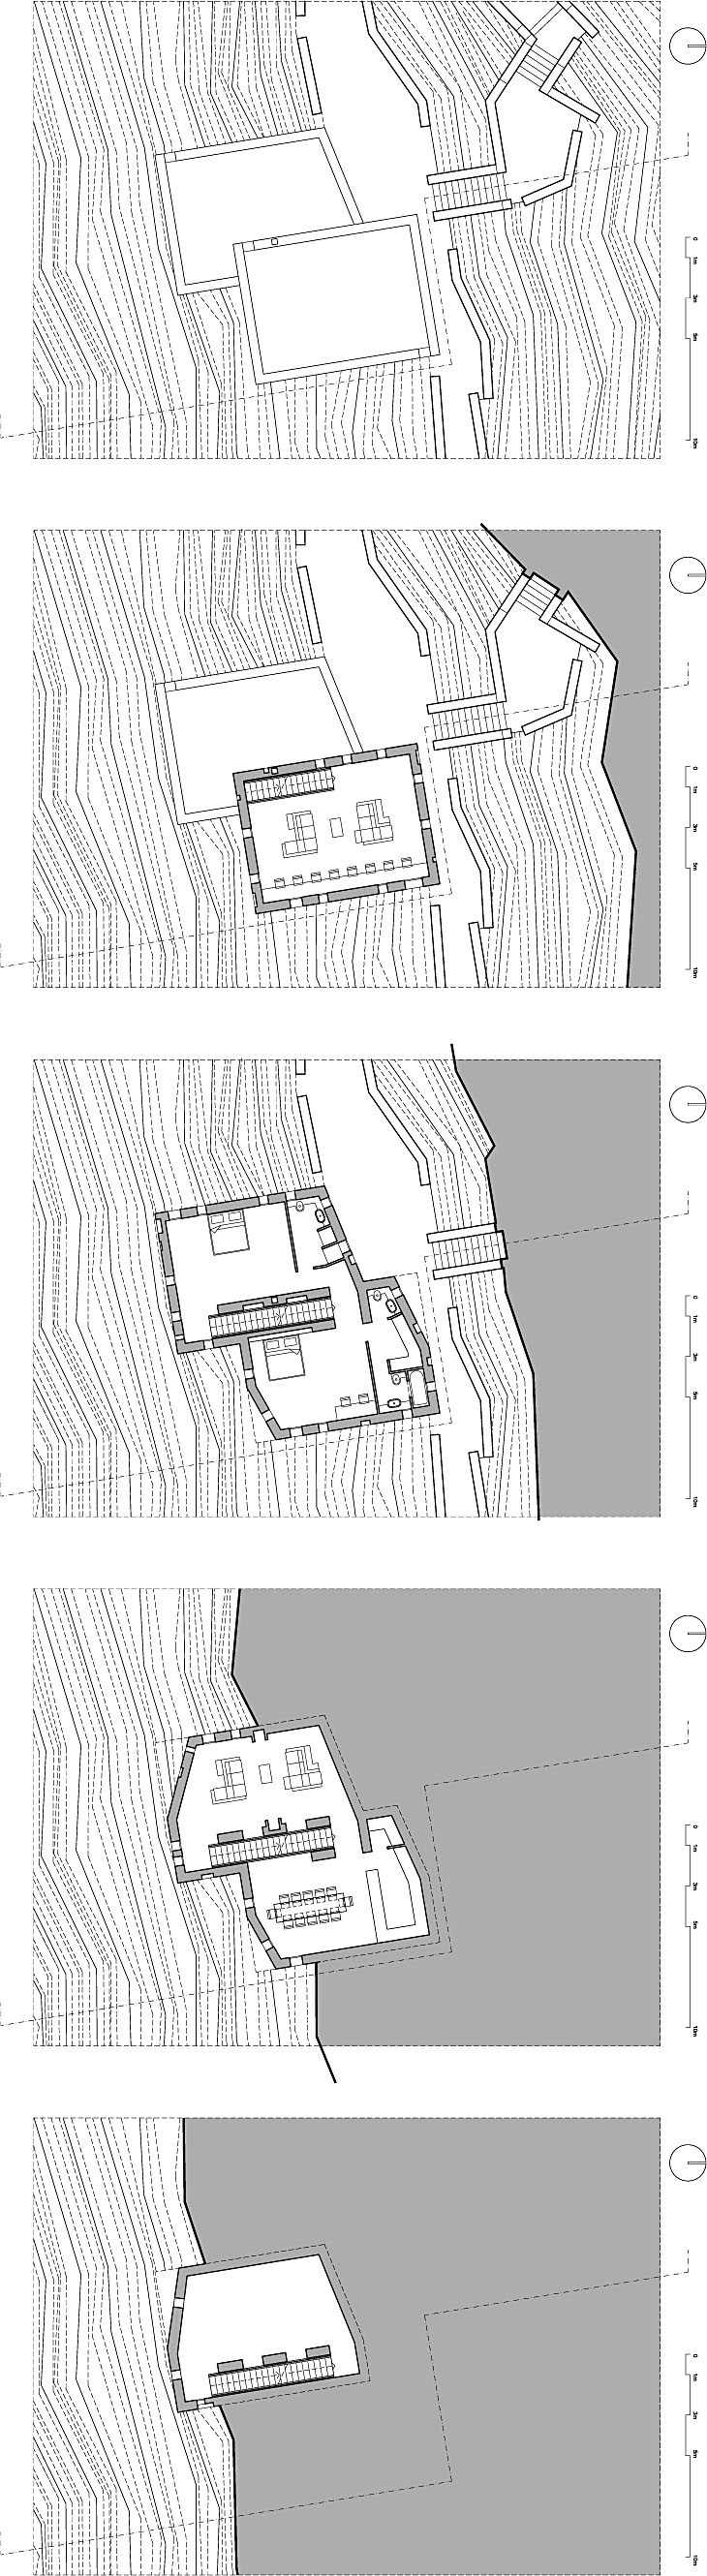 Archisearch » Duetheke [Architheke XI]: Siamese Rural Turrette Residential Prototype Architectural Design: Aristotheke (Design Research)